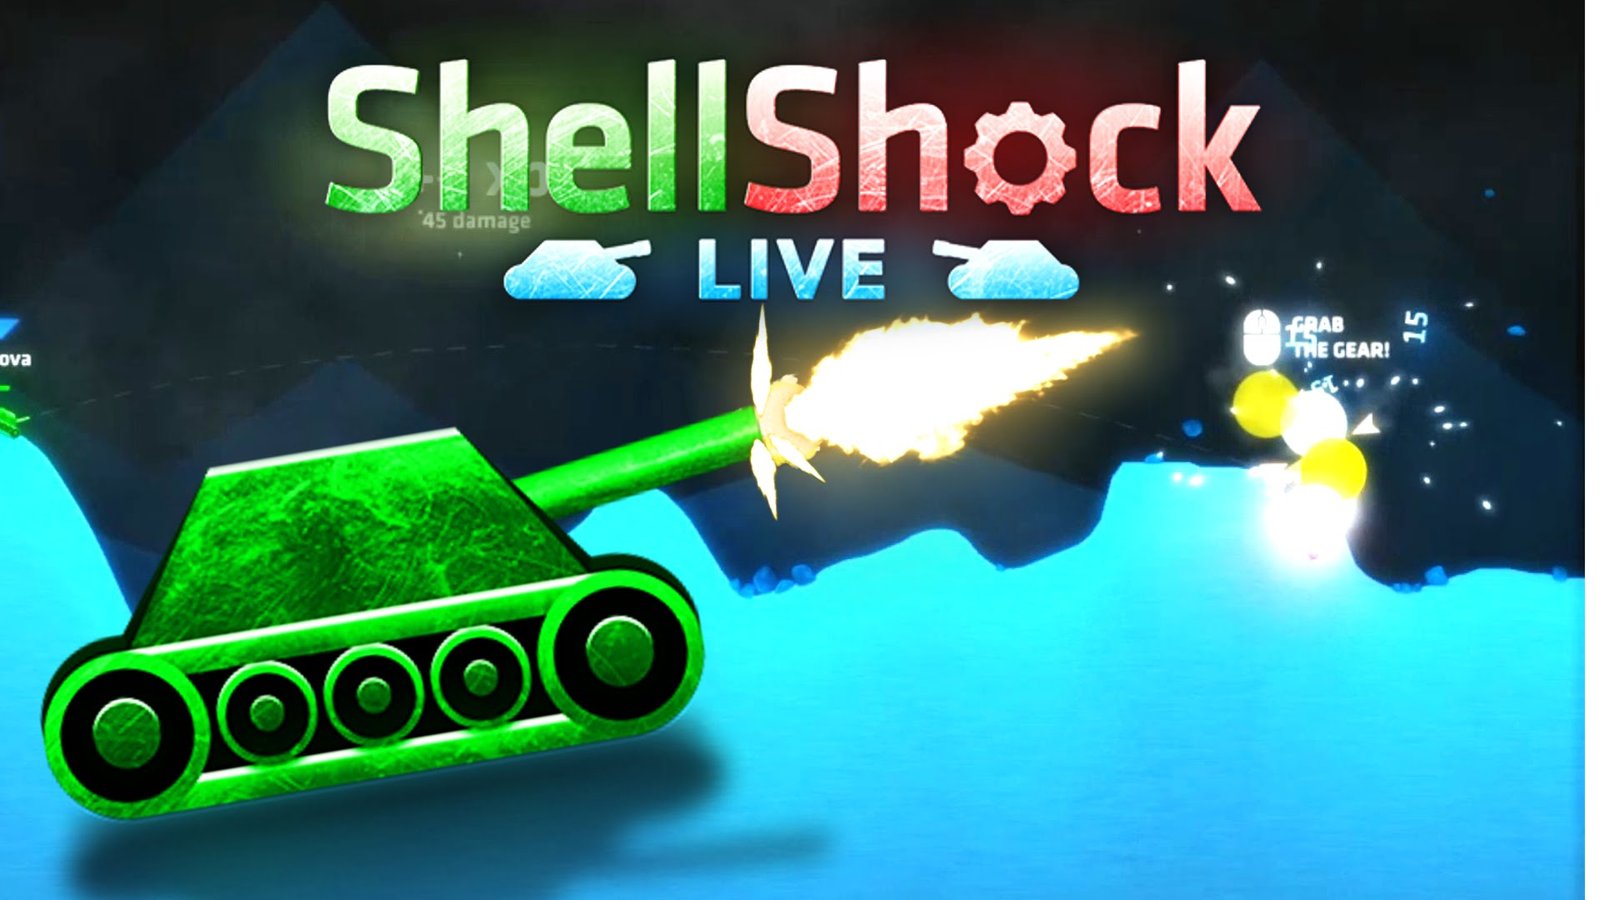 shellshock live final boss